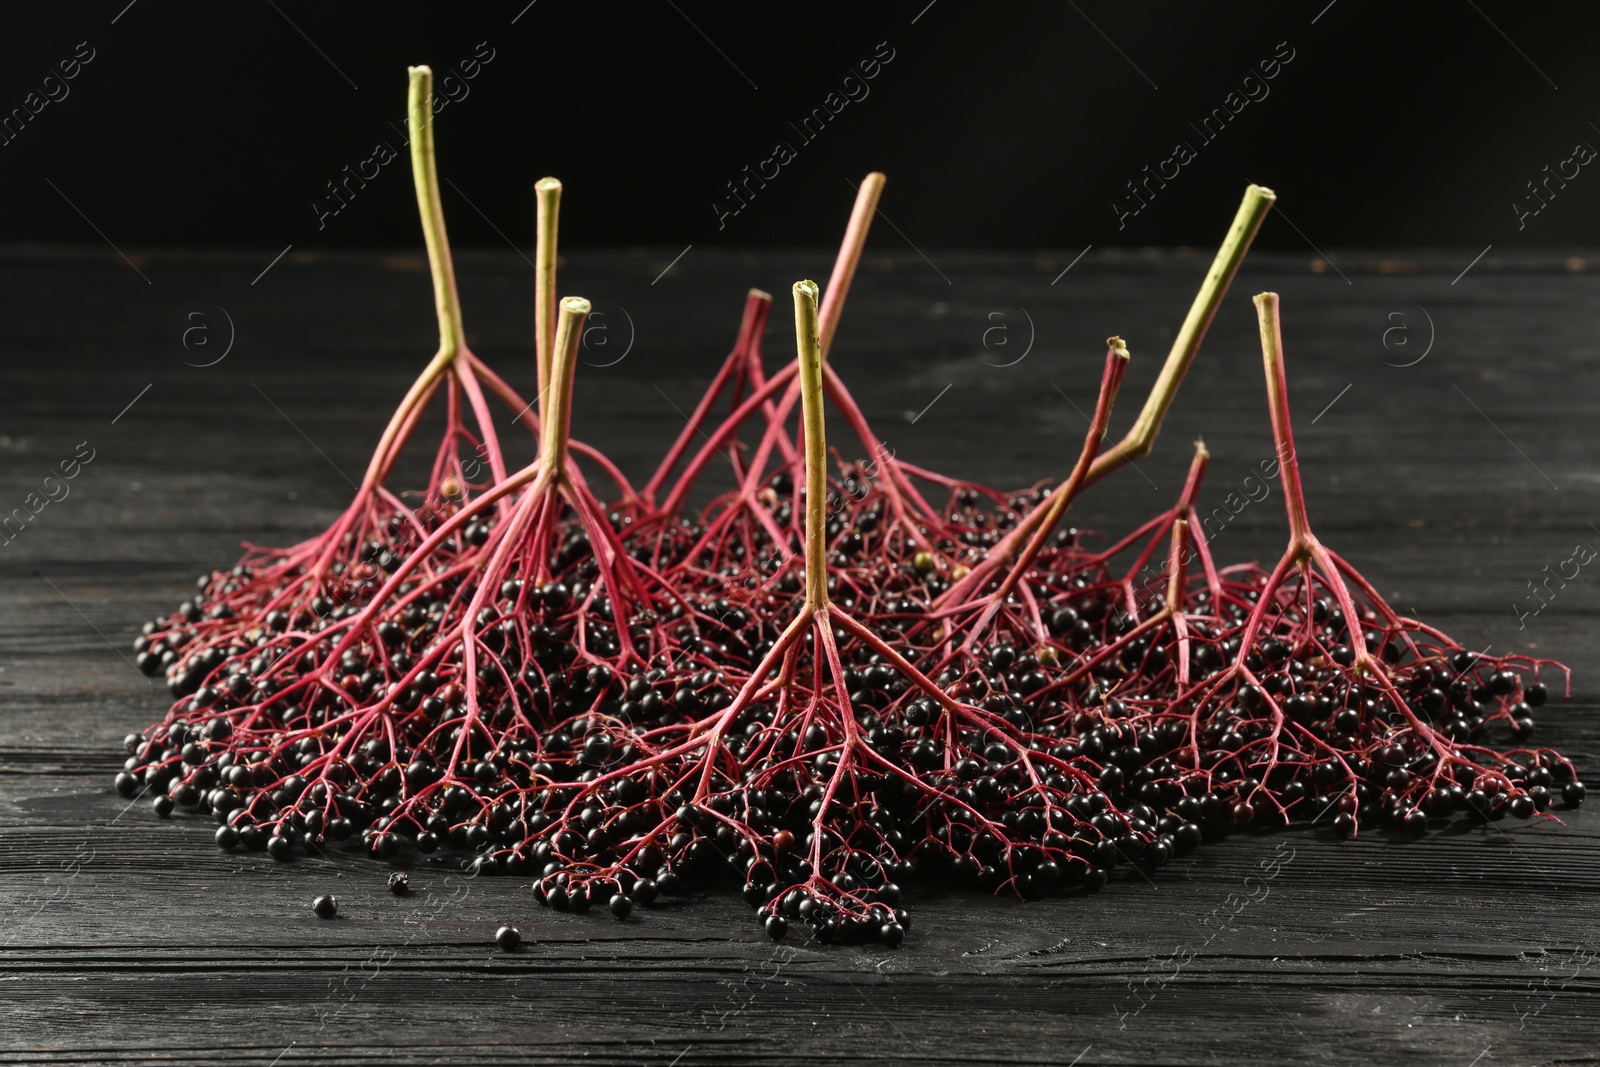 Photo of Bunches of ripe elderberries (Sambucus) on black wooden table